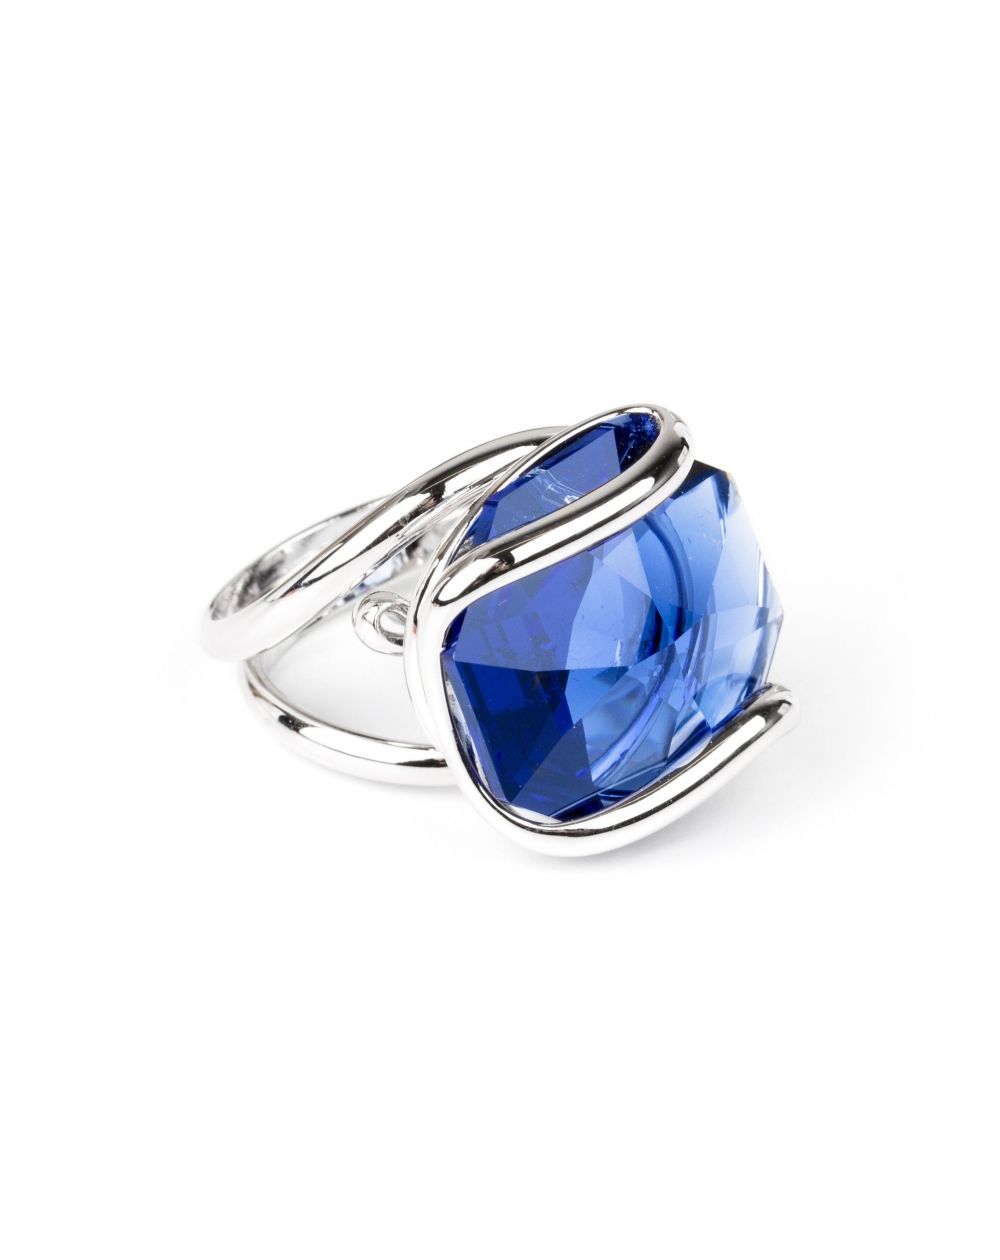 Marazzini - donkerblauwe kristallen Swarovski ring